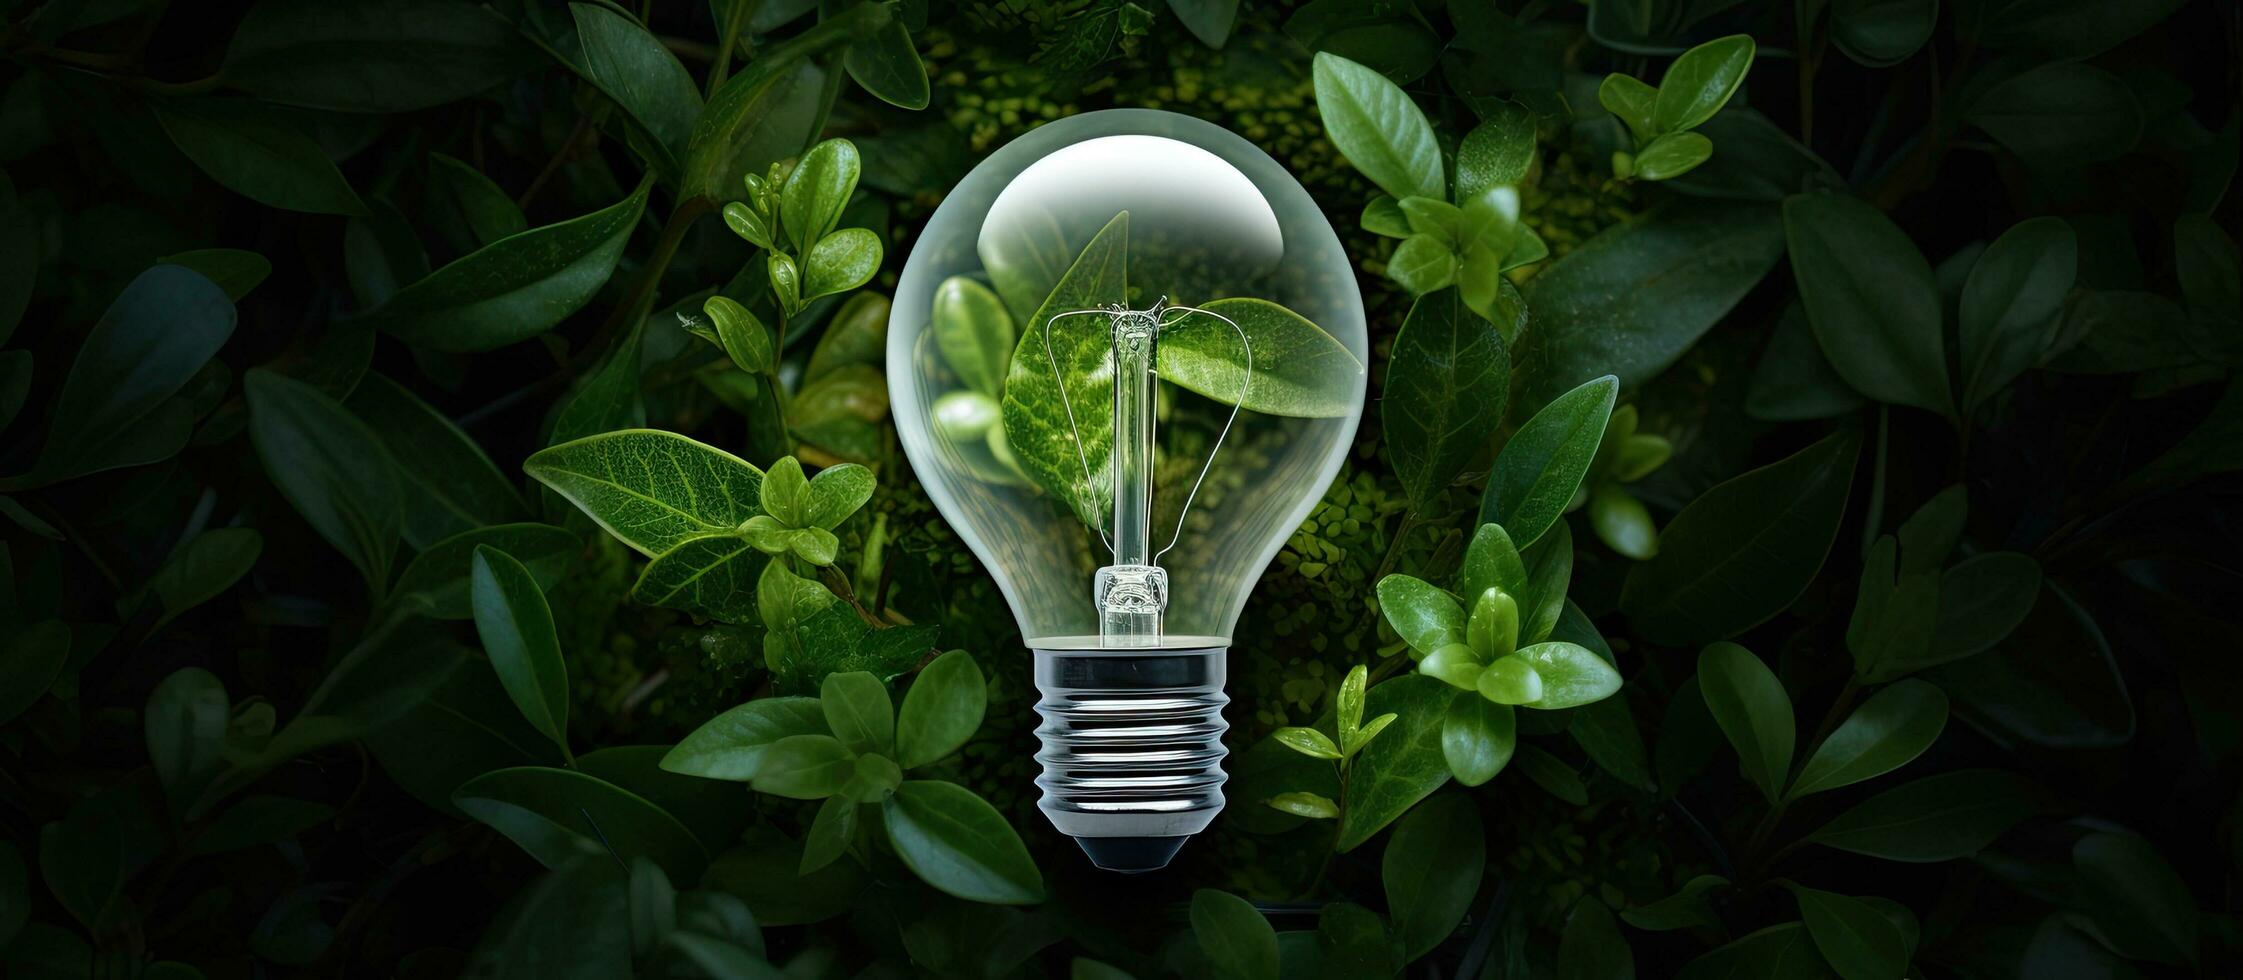 Sustainable lightbulb made from leaves emphasizing ecological energy conservation photo